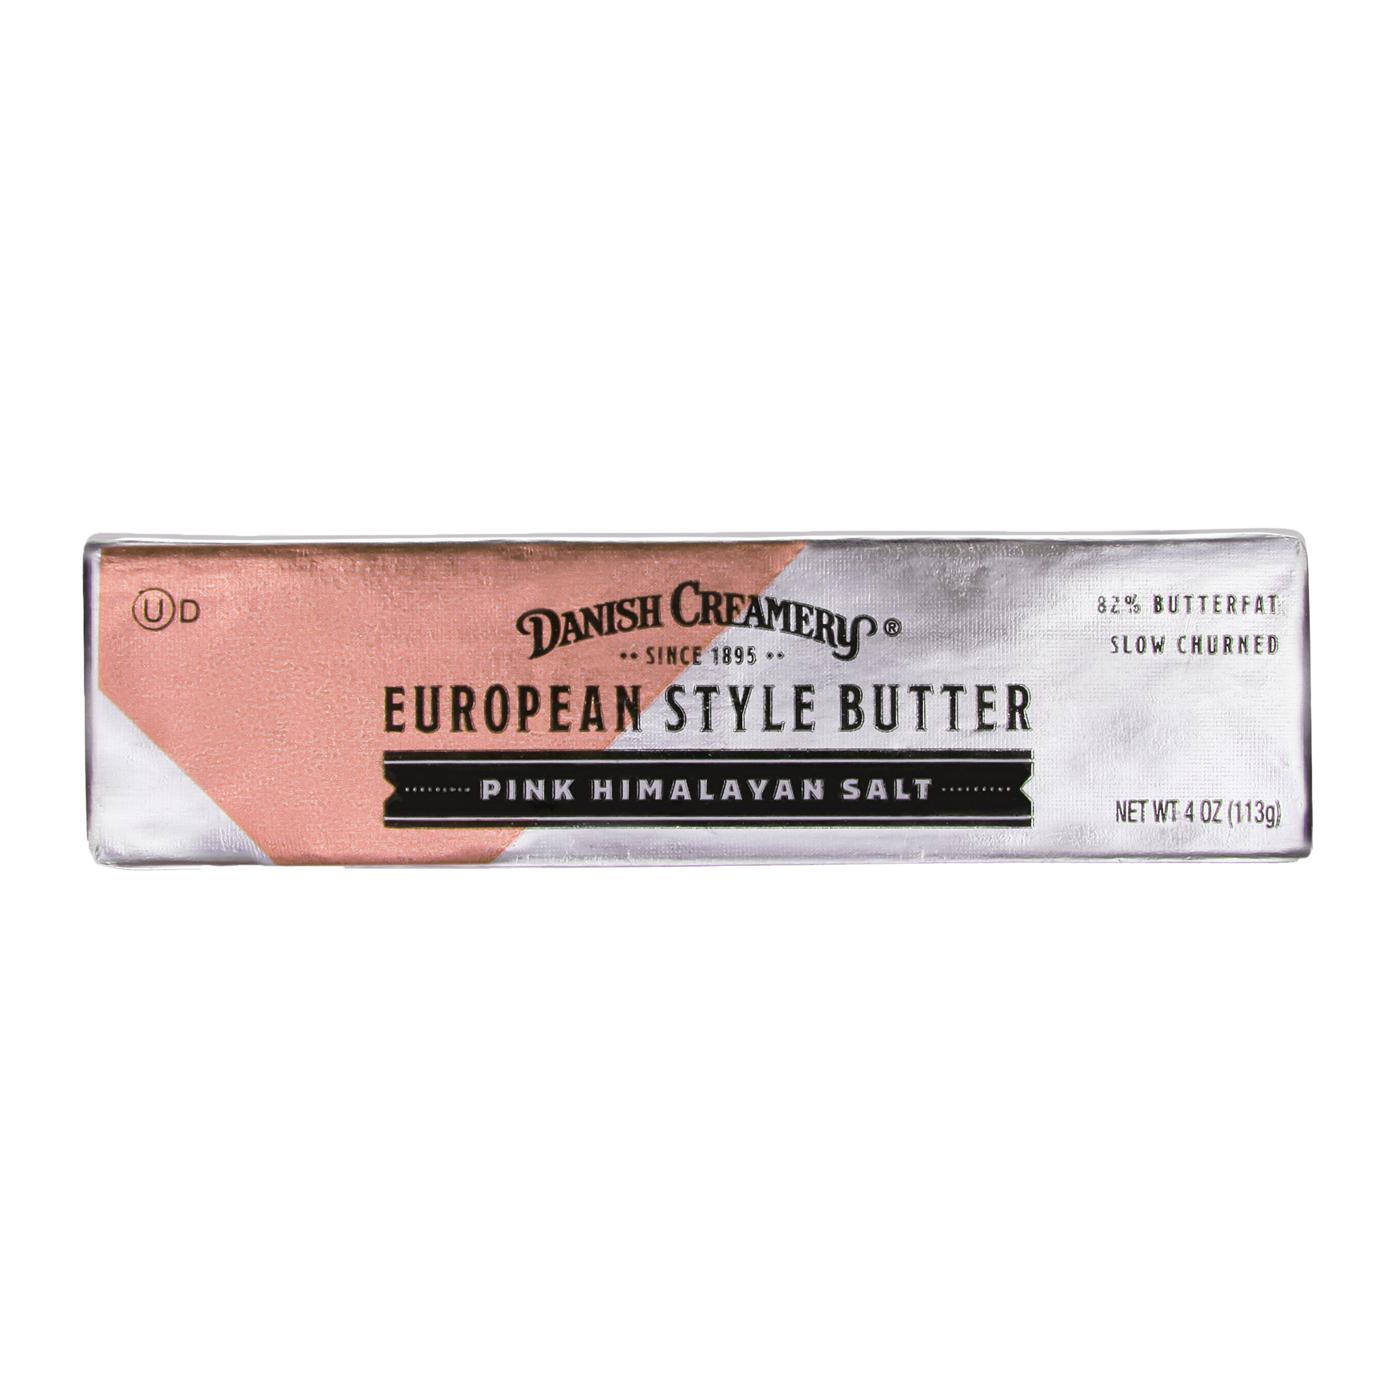 Danish Creamery Pink Himalayan Salt European Style Butter; image 1 of 2